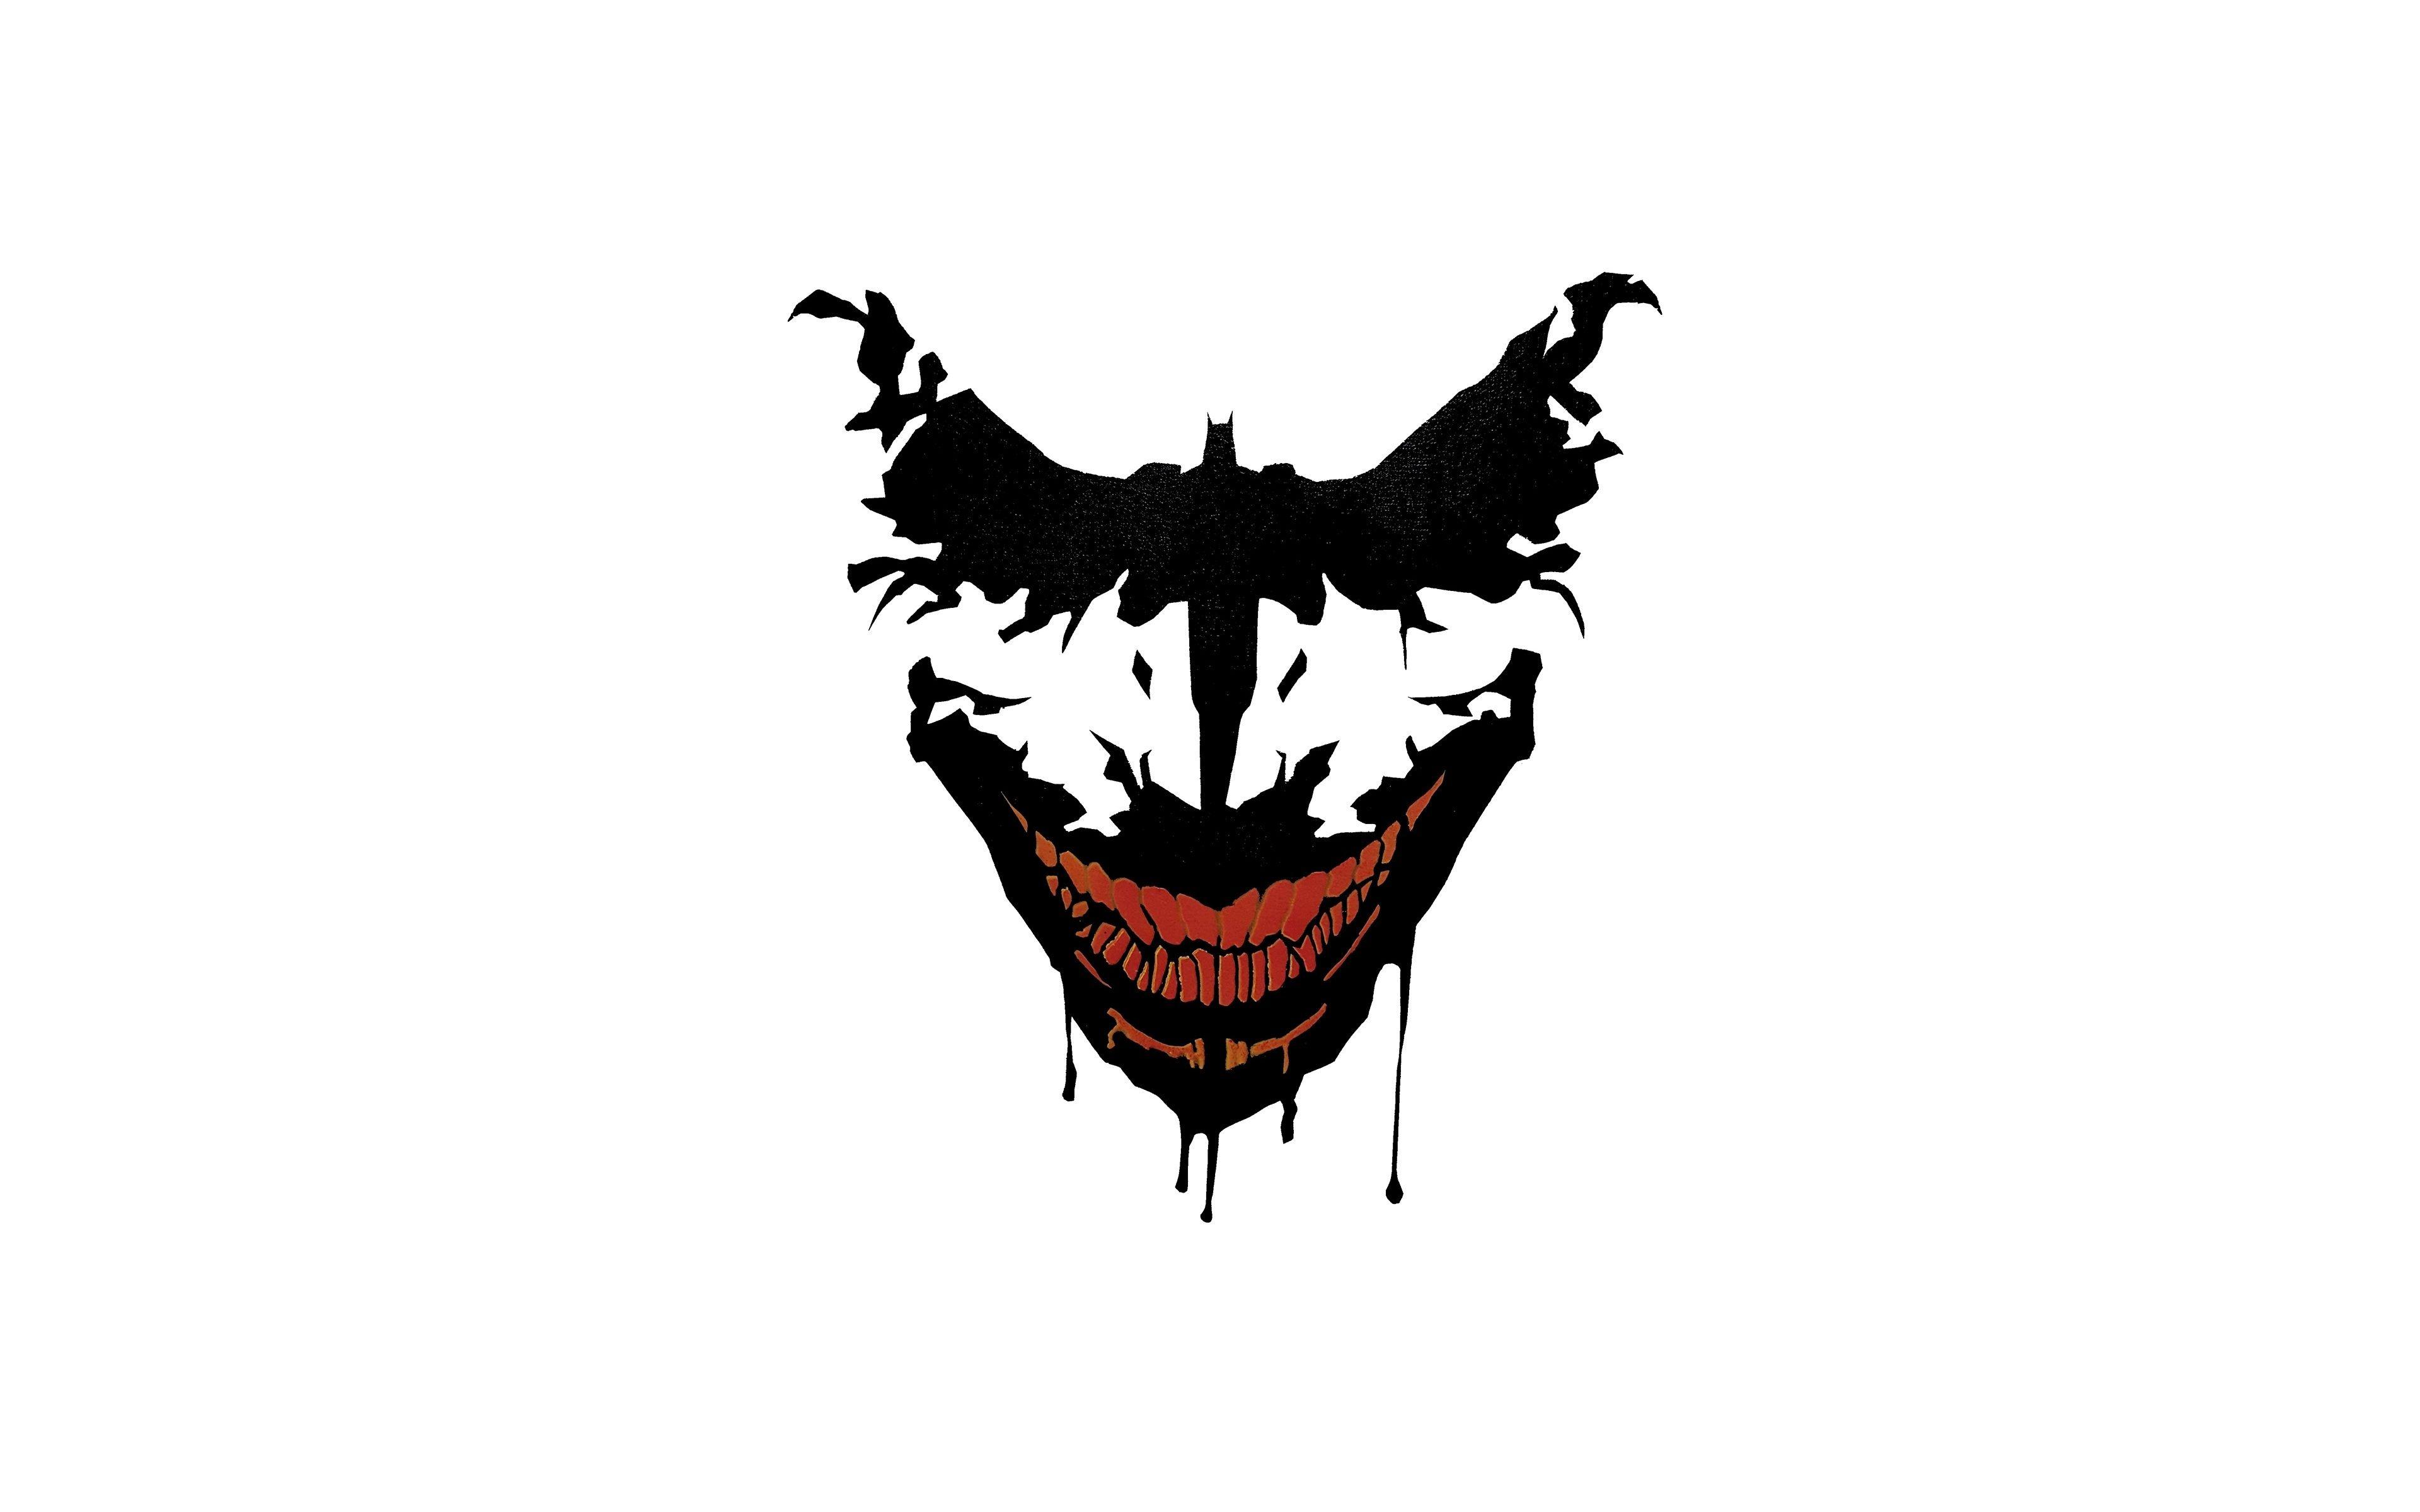 40 Gambar Joker Mouth Wallpaper Hd terbaru 2020